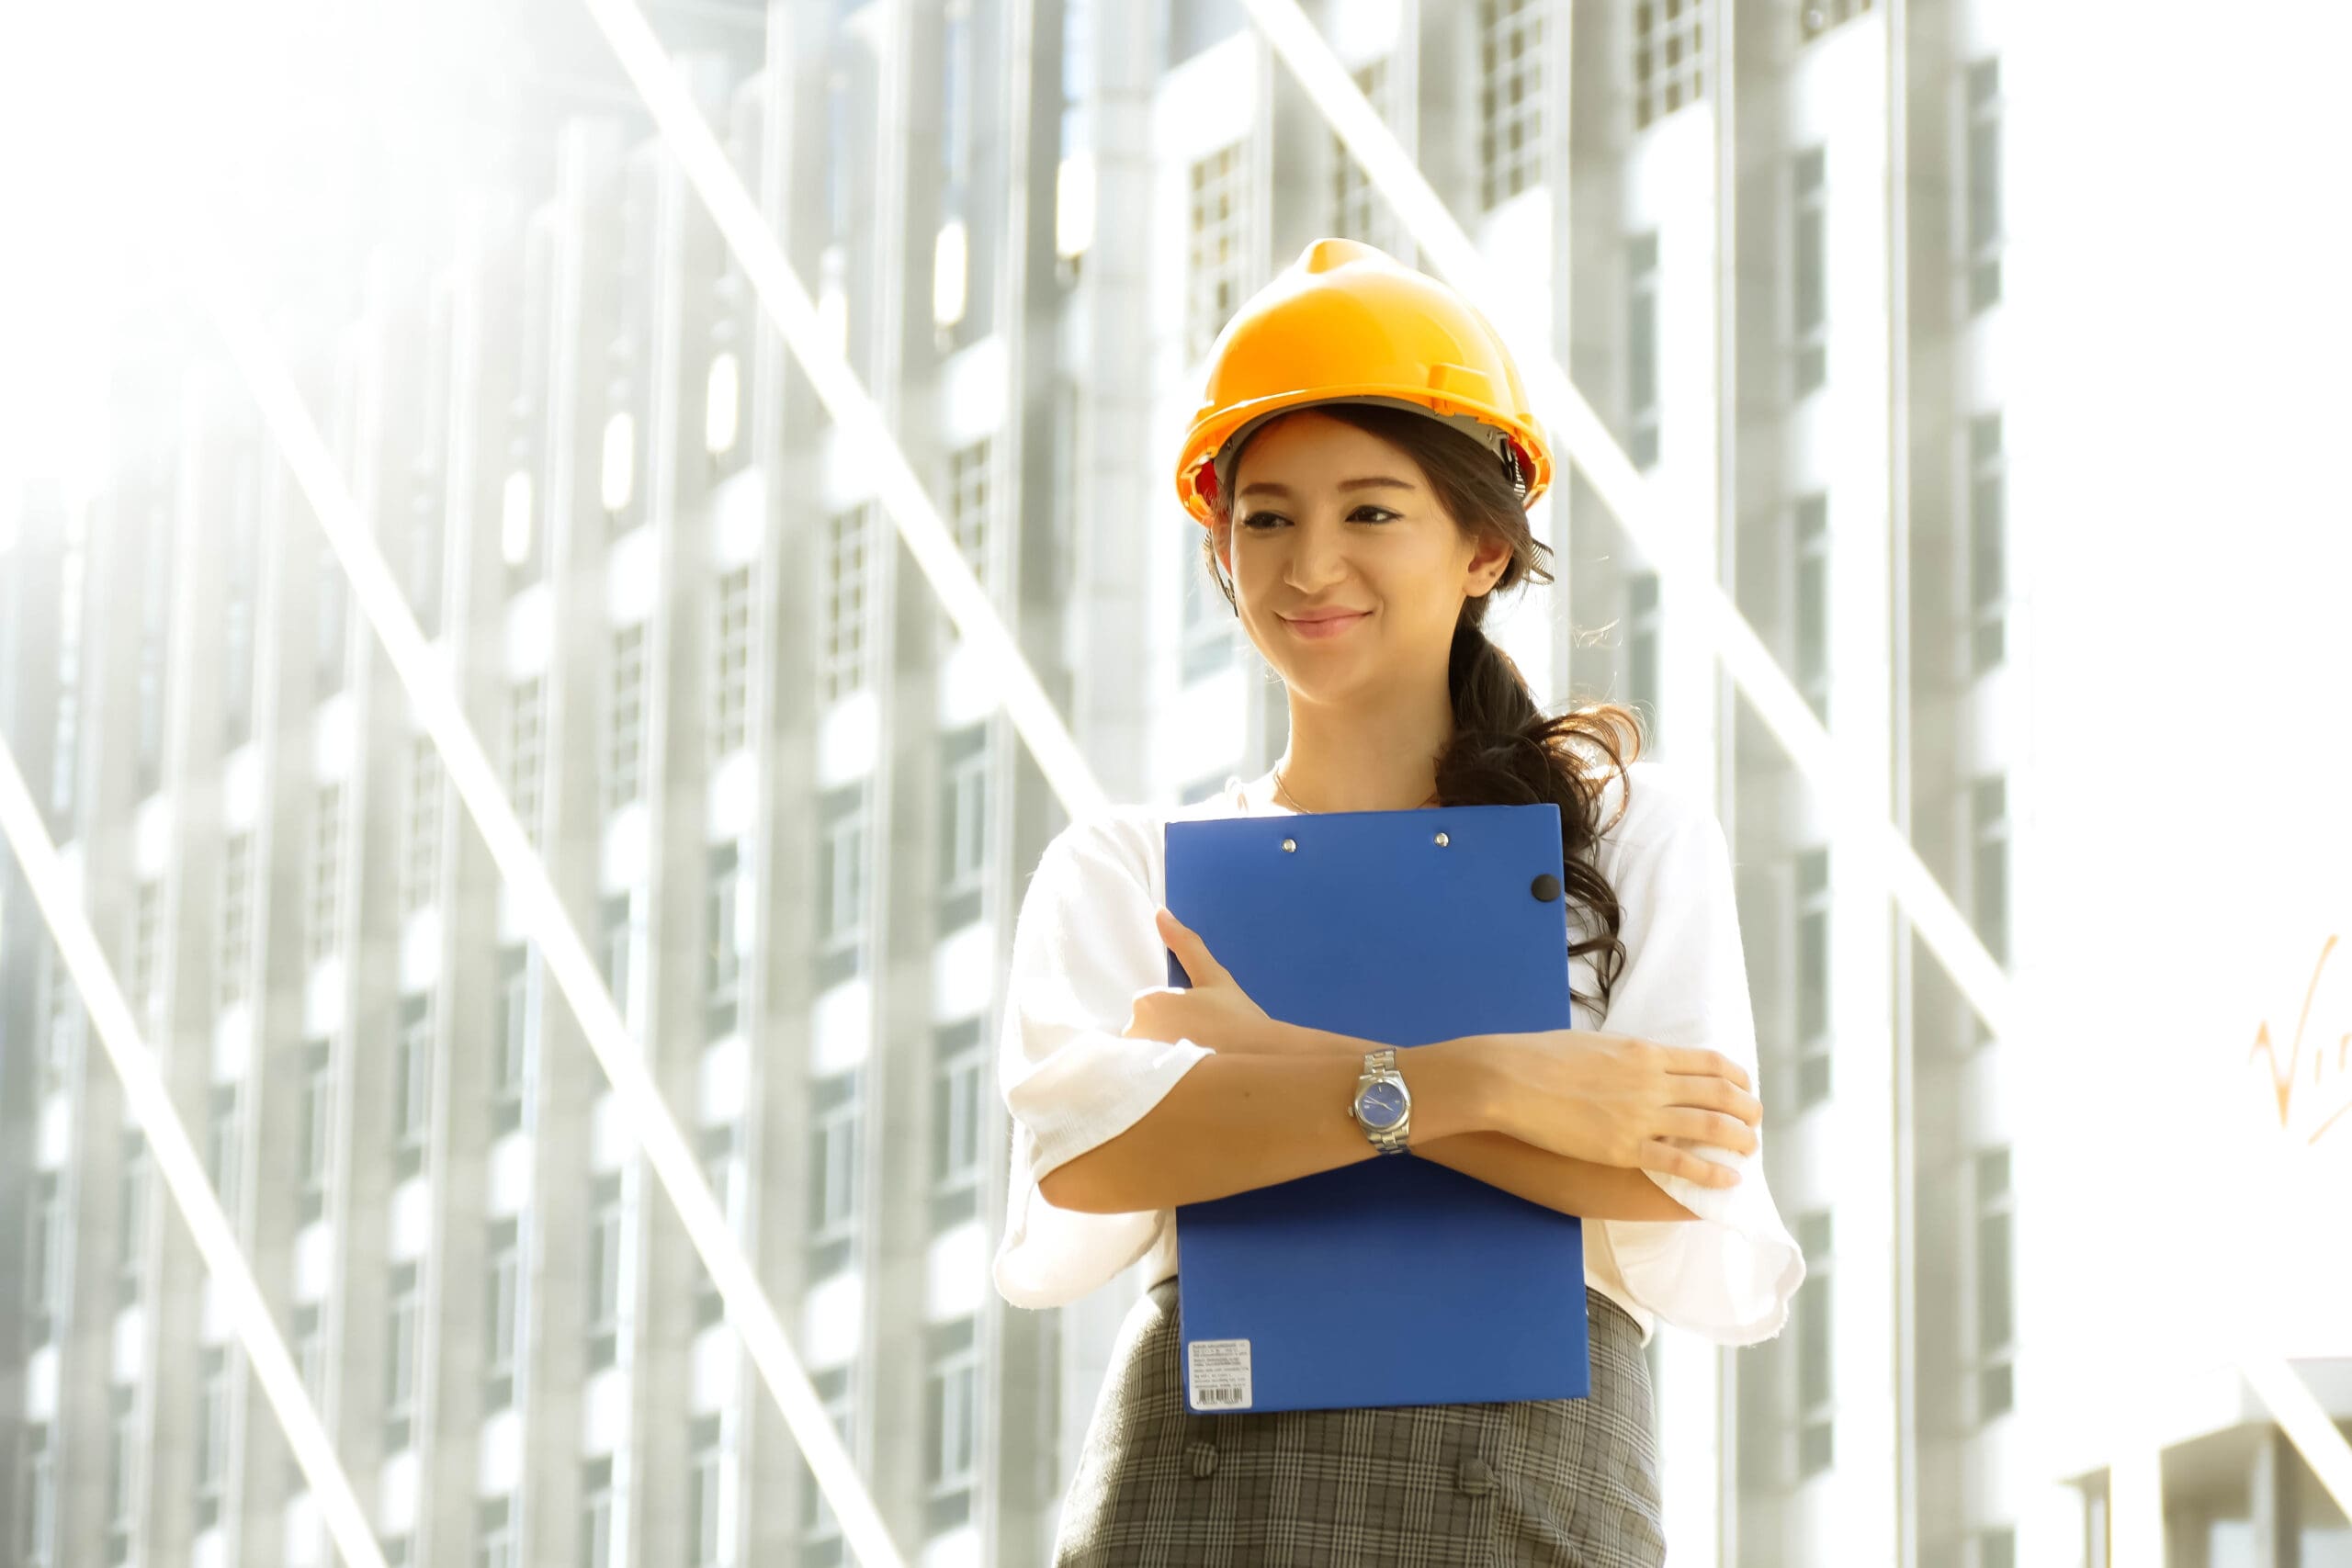 Empowering women in construction